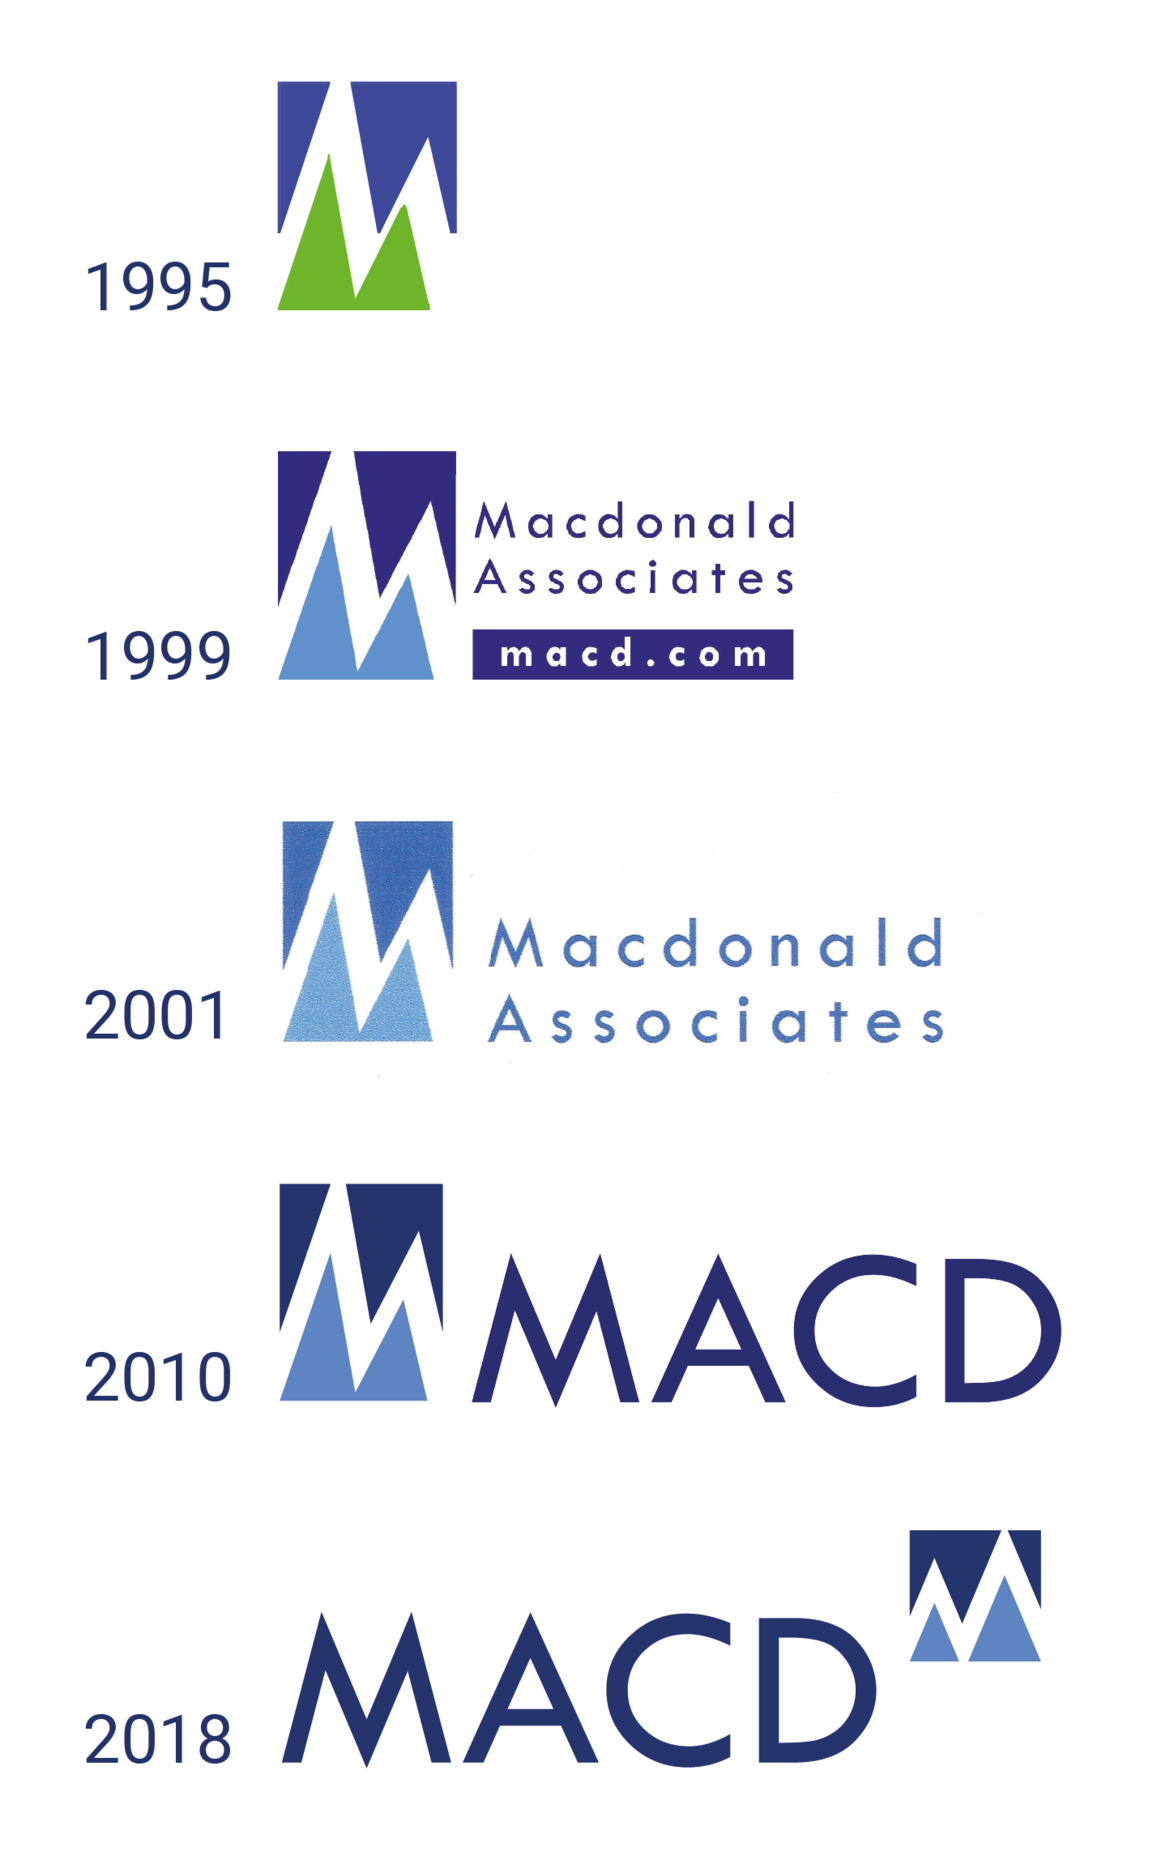 [Translate to Englisch:] MACD Logo Development 1995-2018